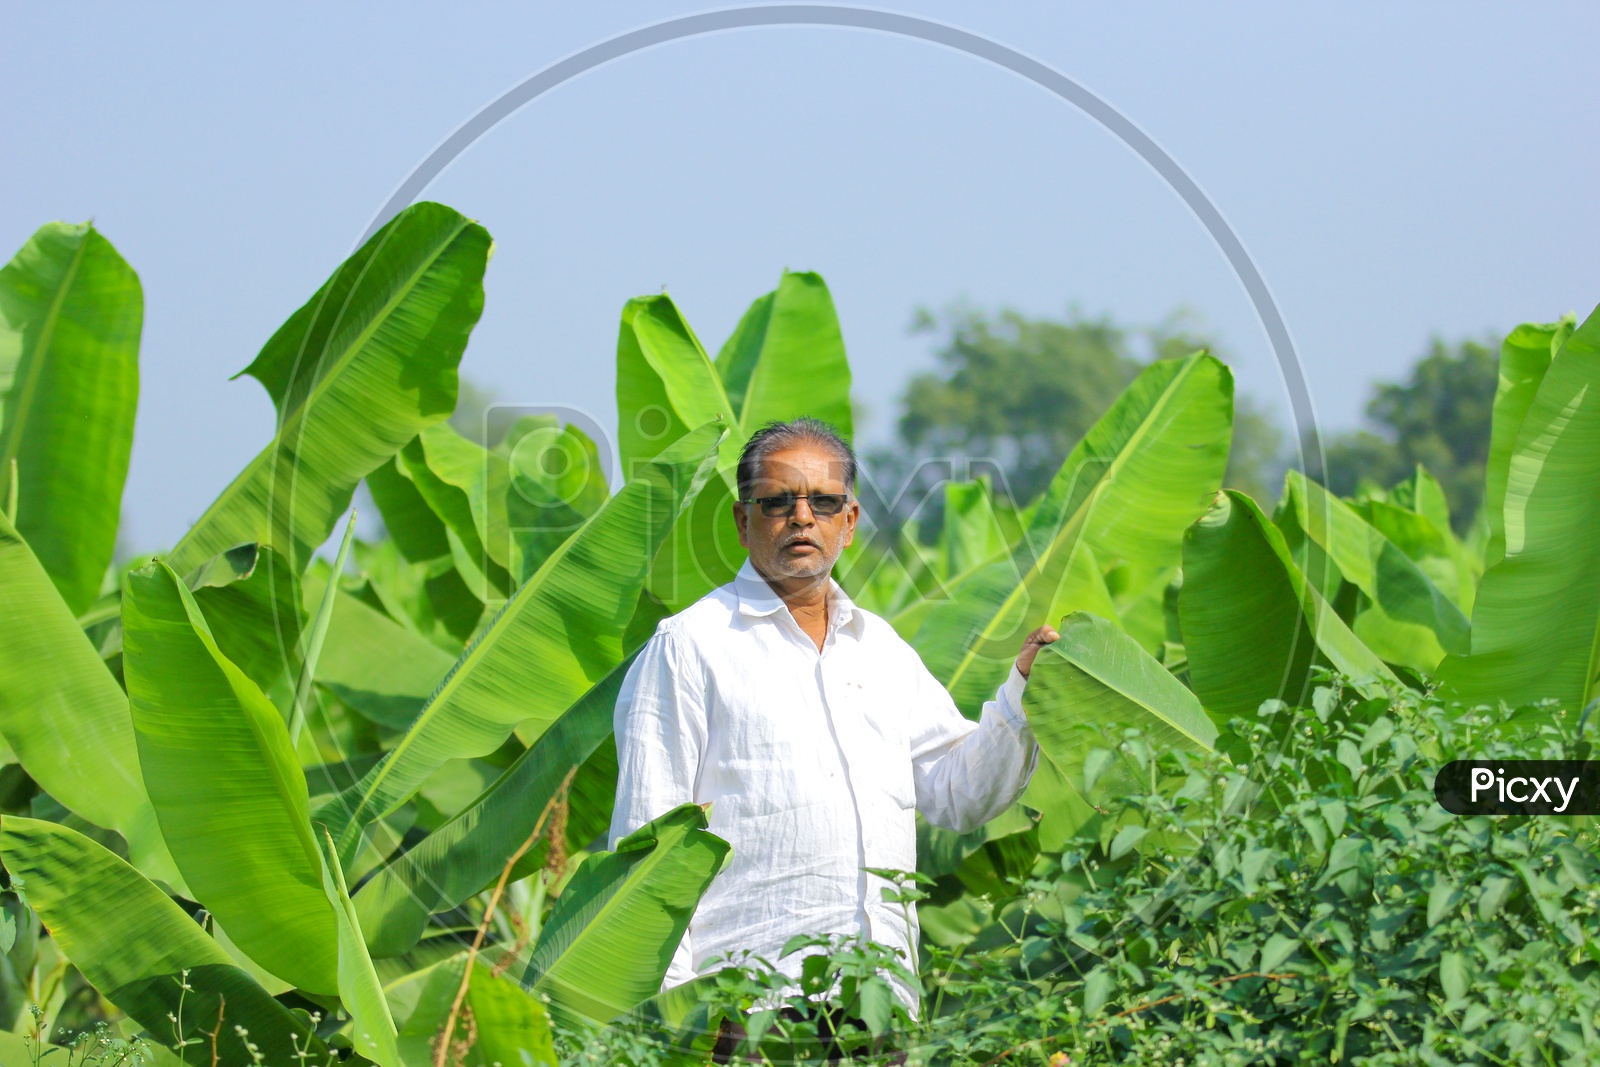 Indian Farmer in a Banana Farming Field